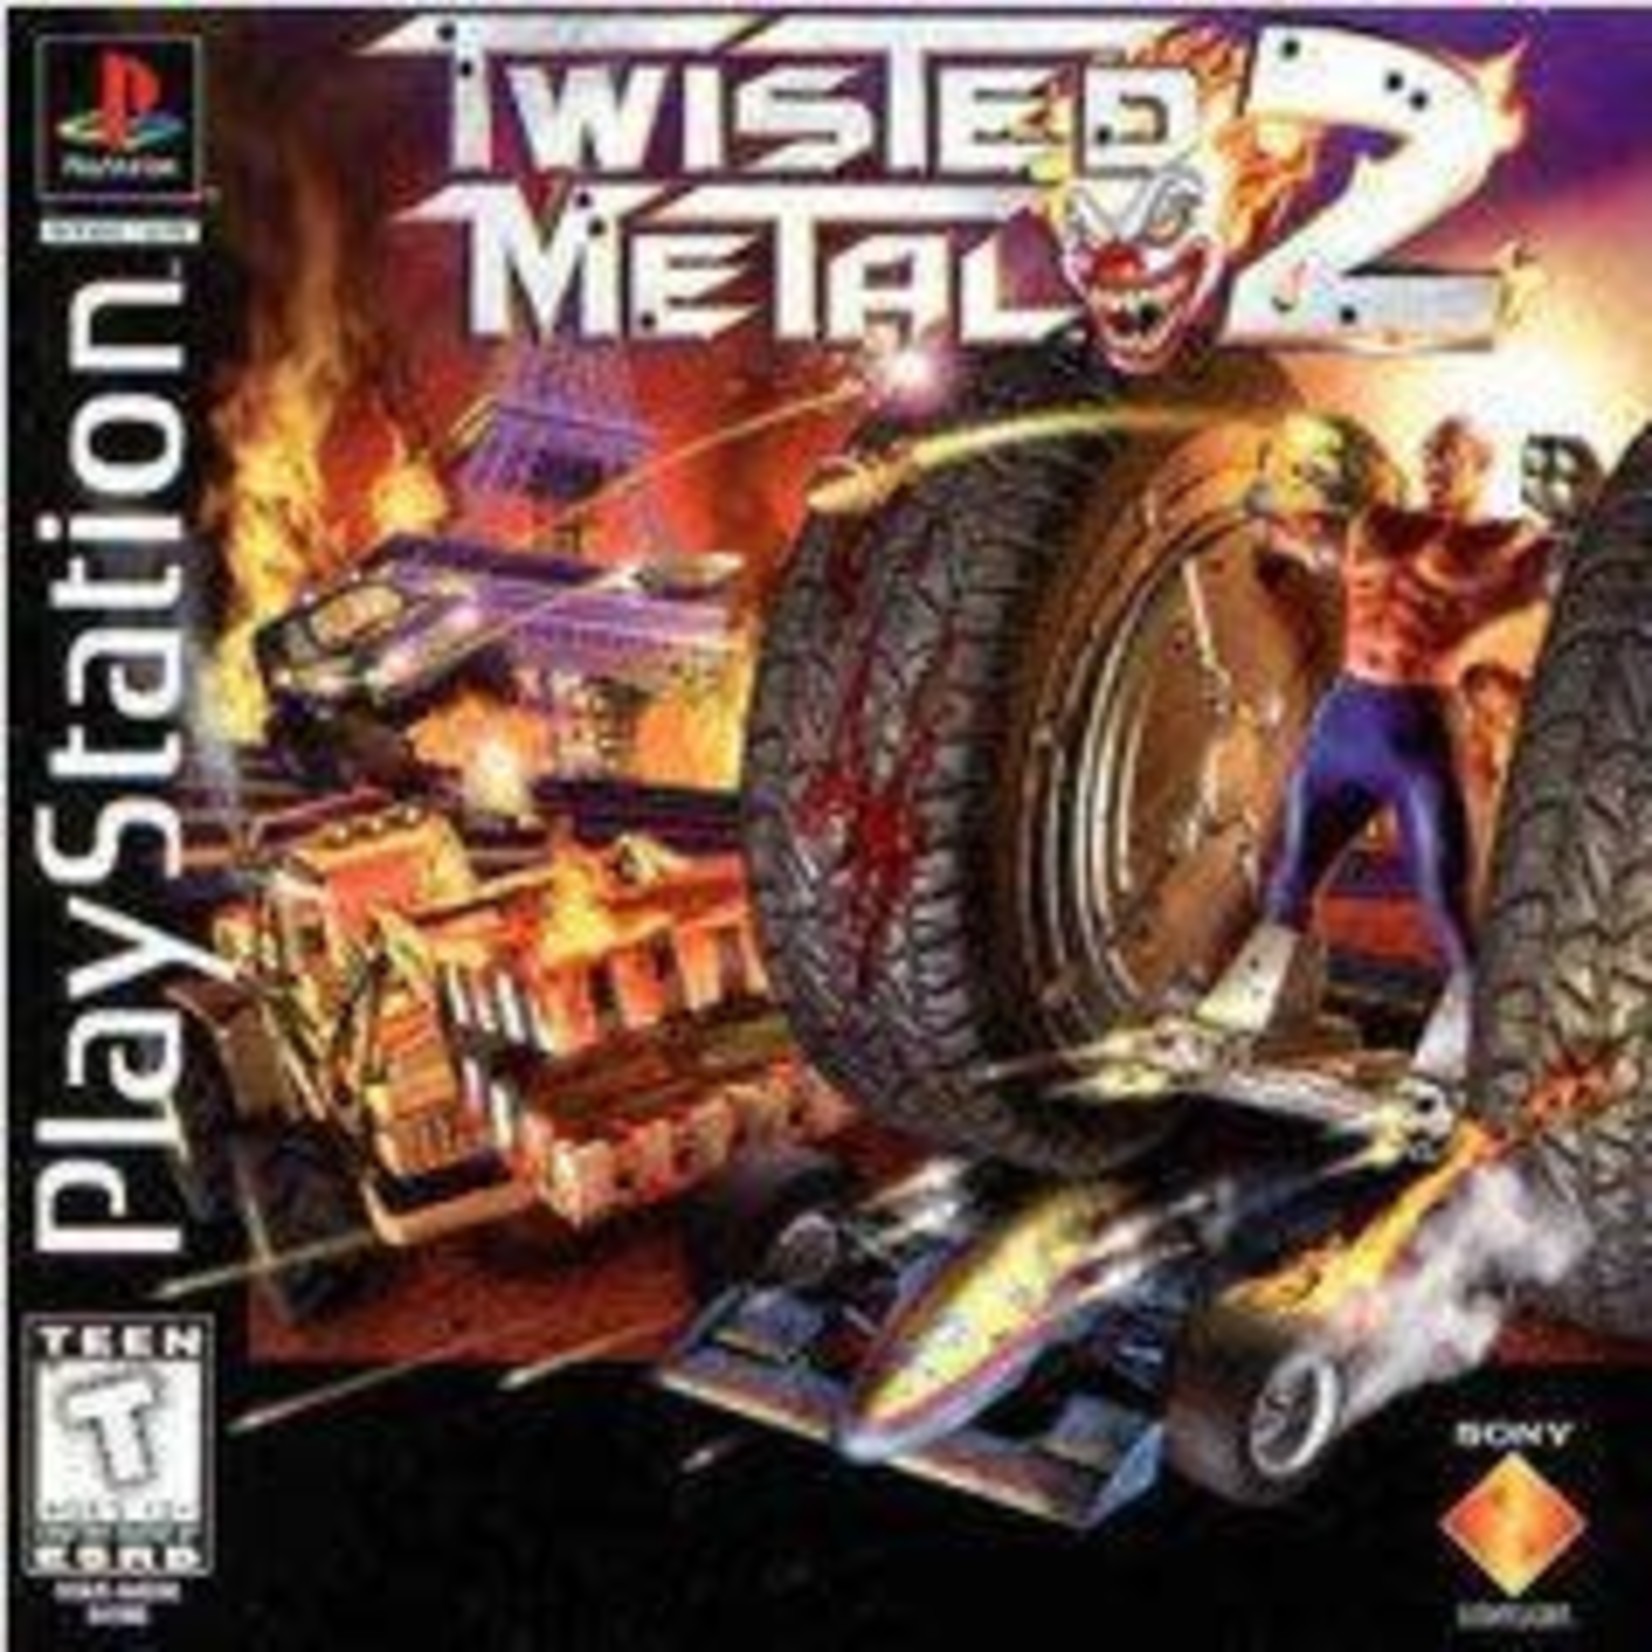 Twisted Metal 2 - Bonfire Games